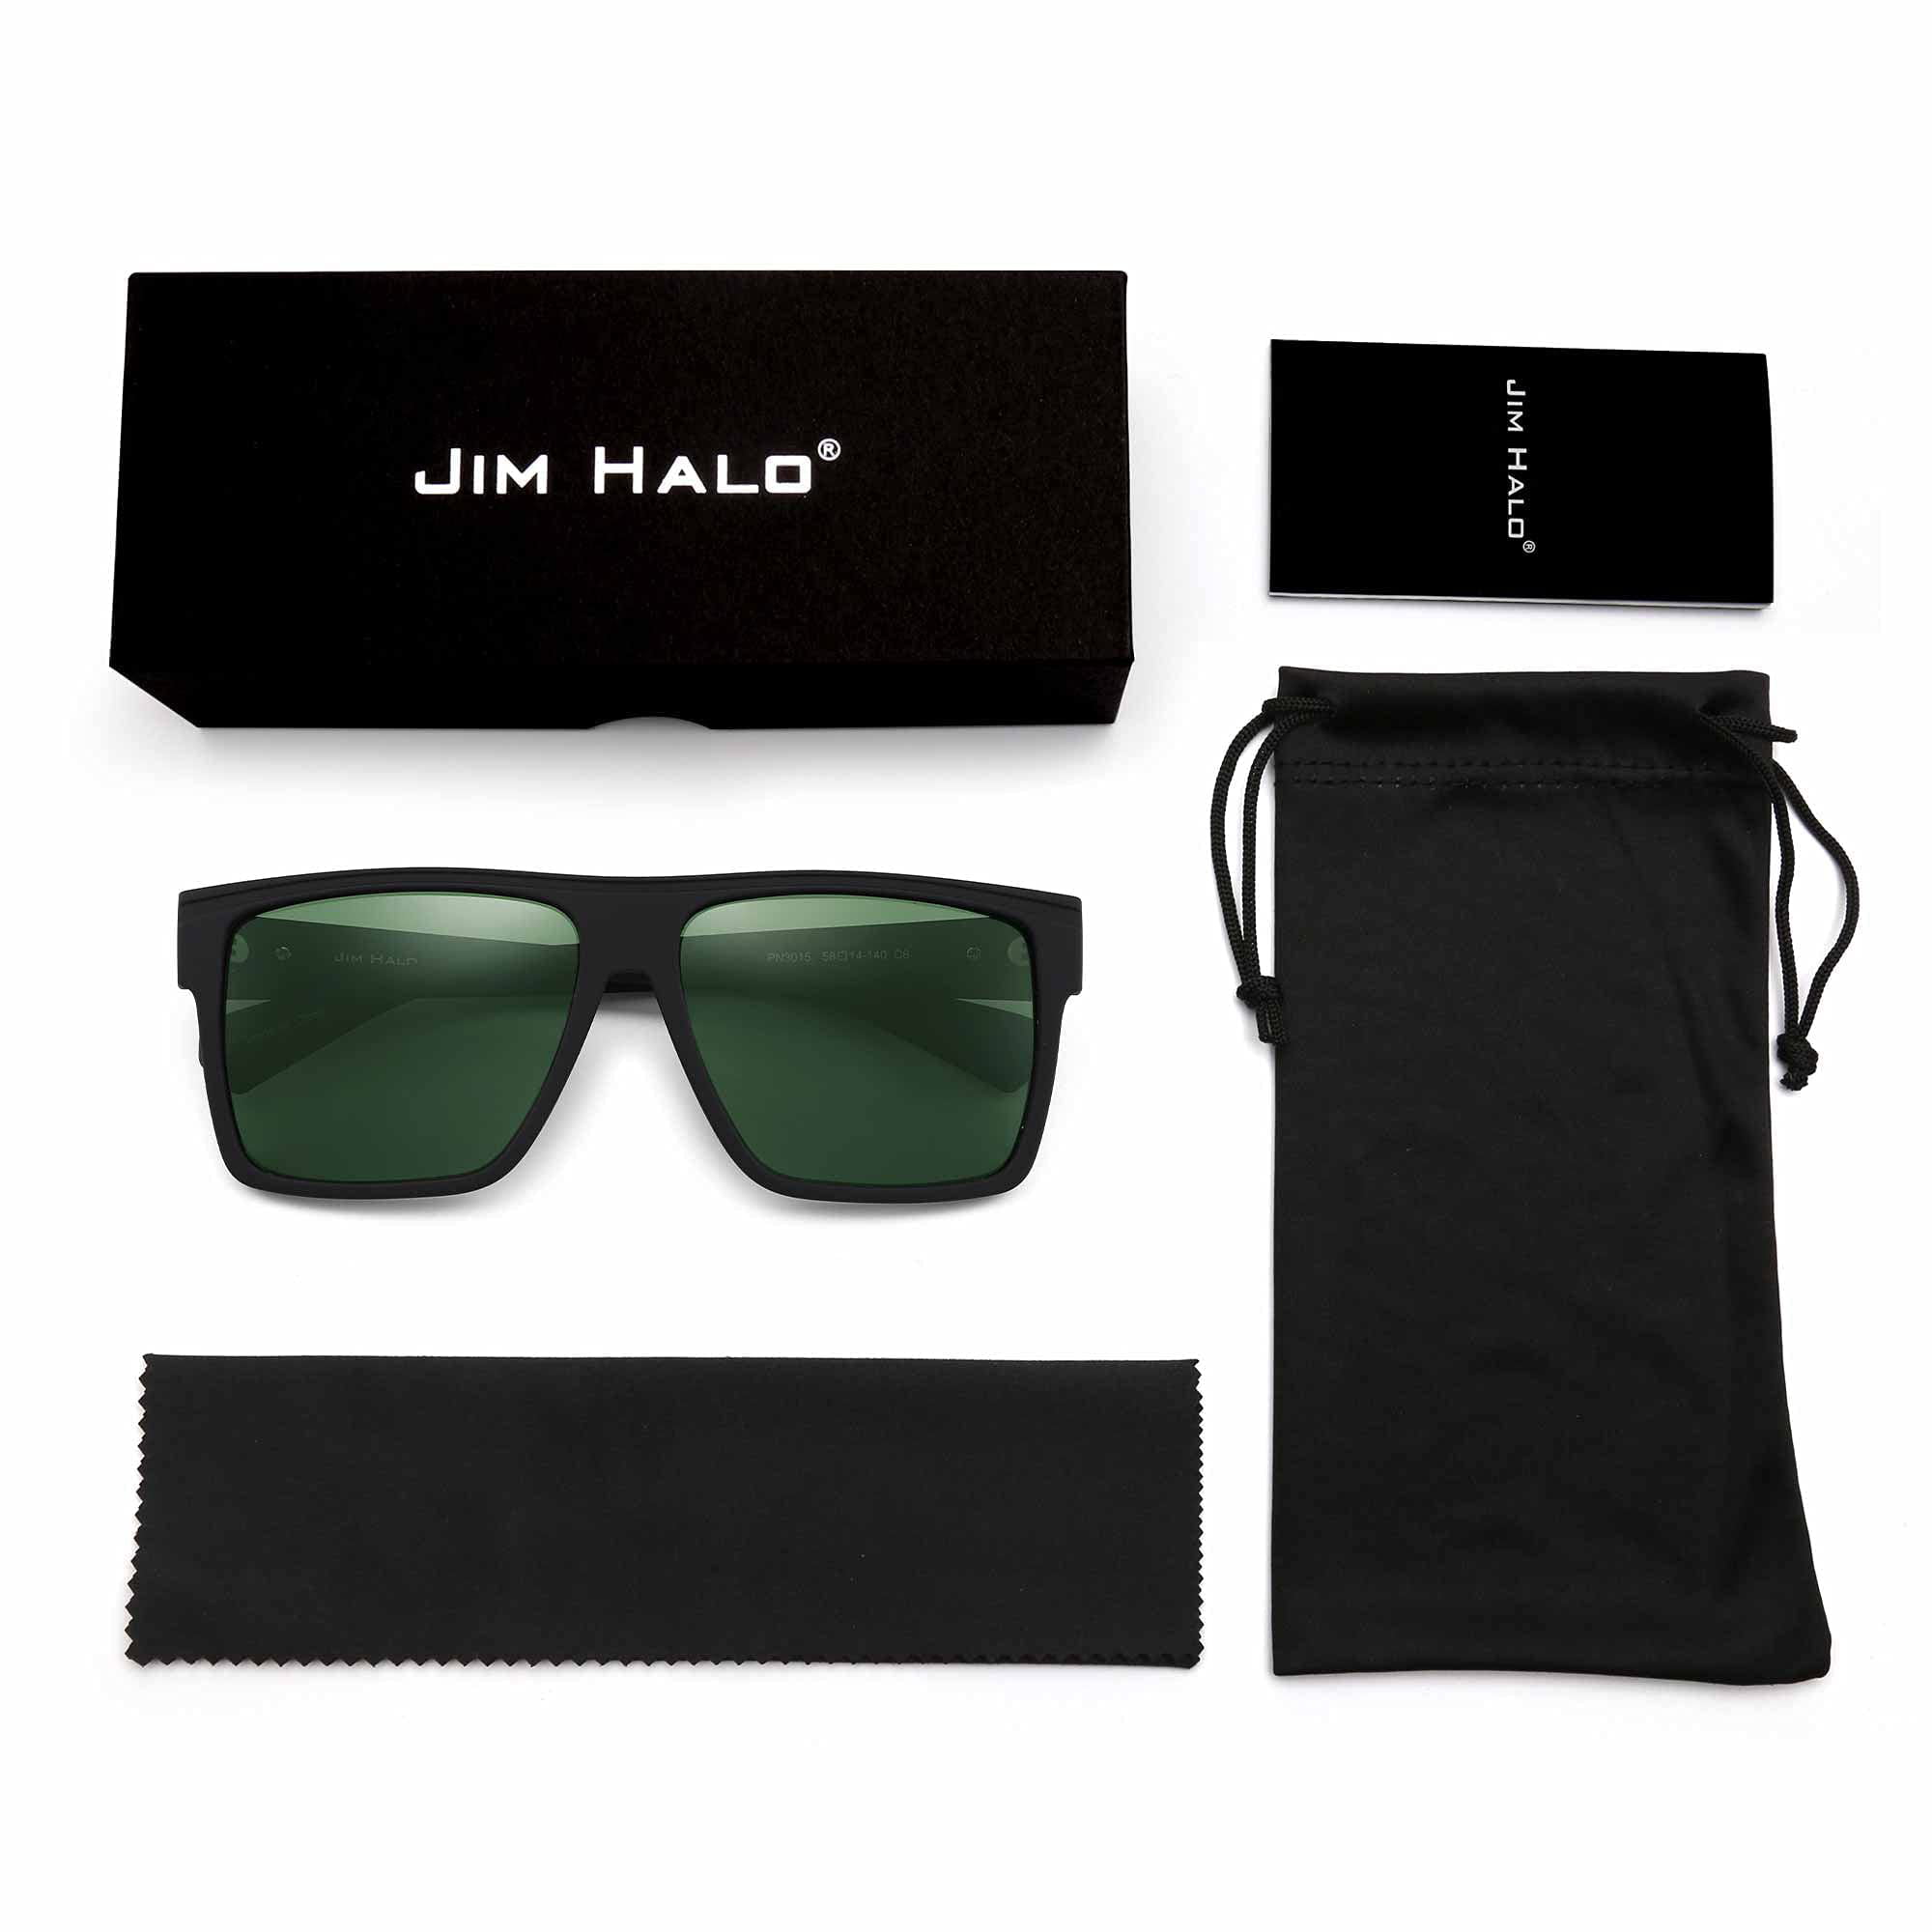 Jim Halo Sunglasses For Men || Unboxing || Transparent sunglasses for power  lenses || 2022 - YouTube